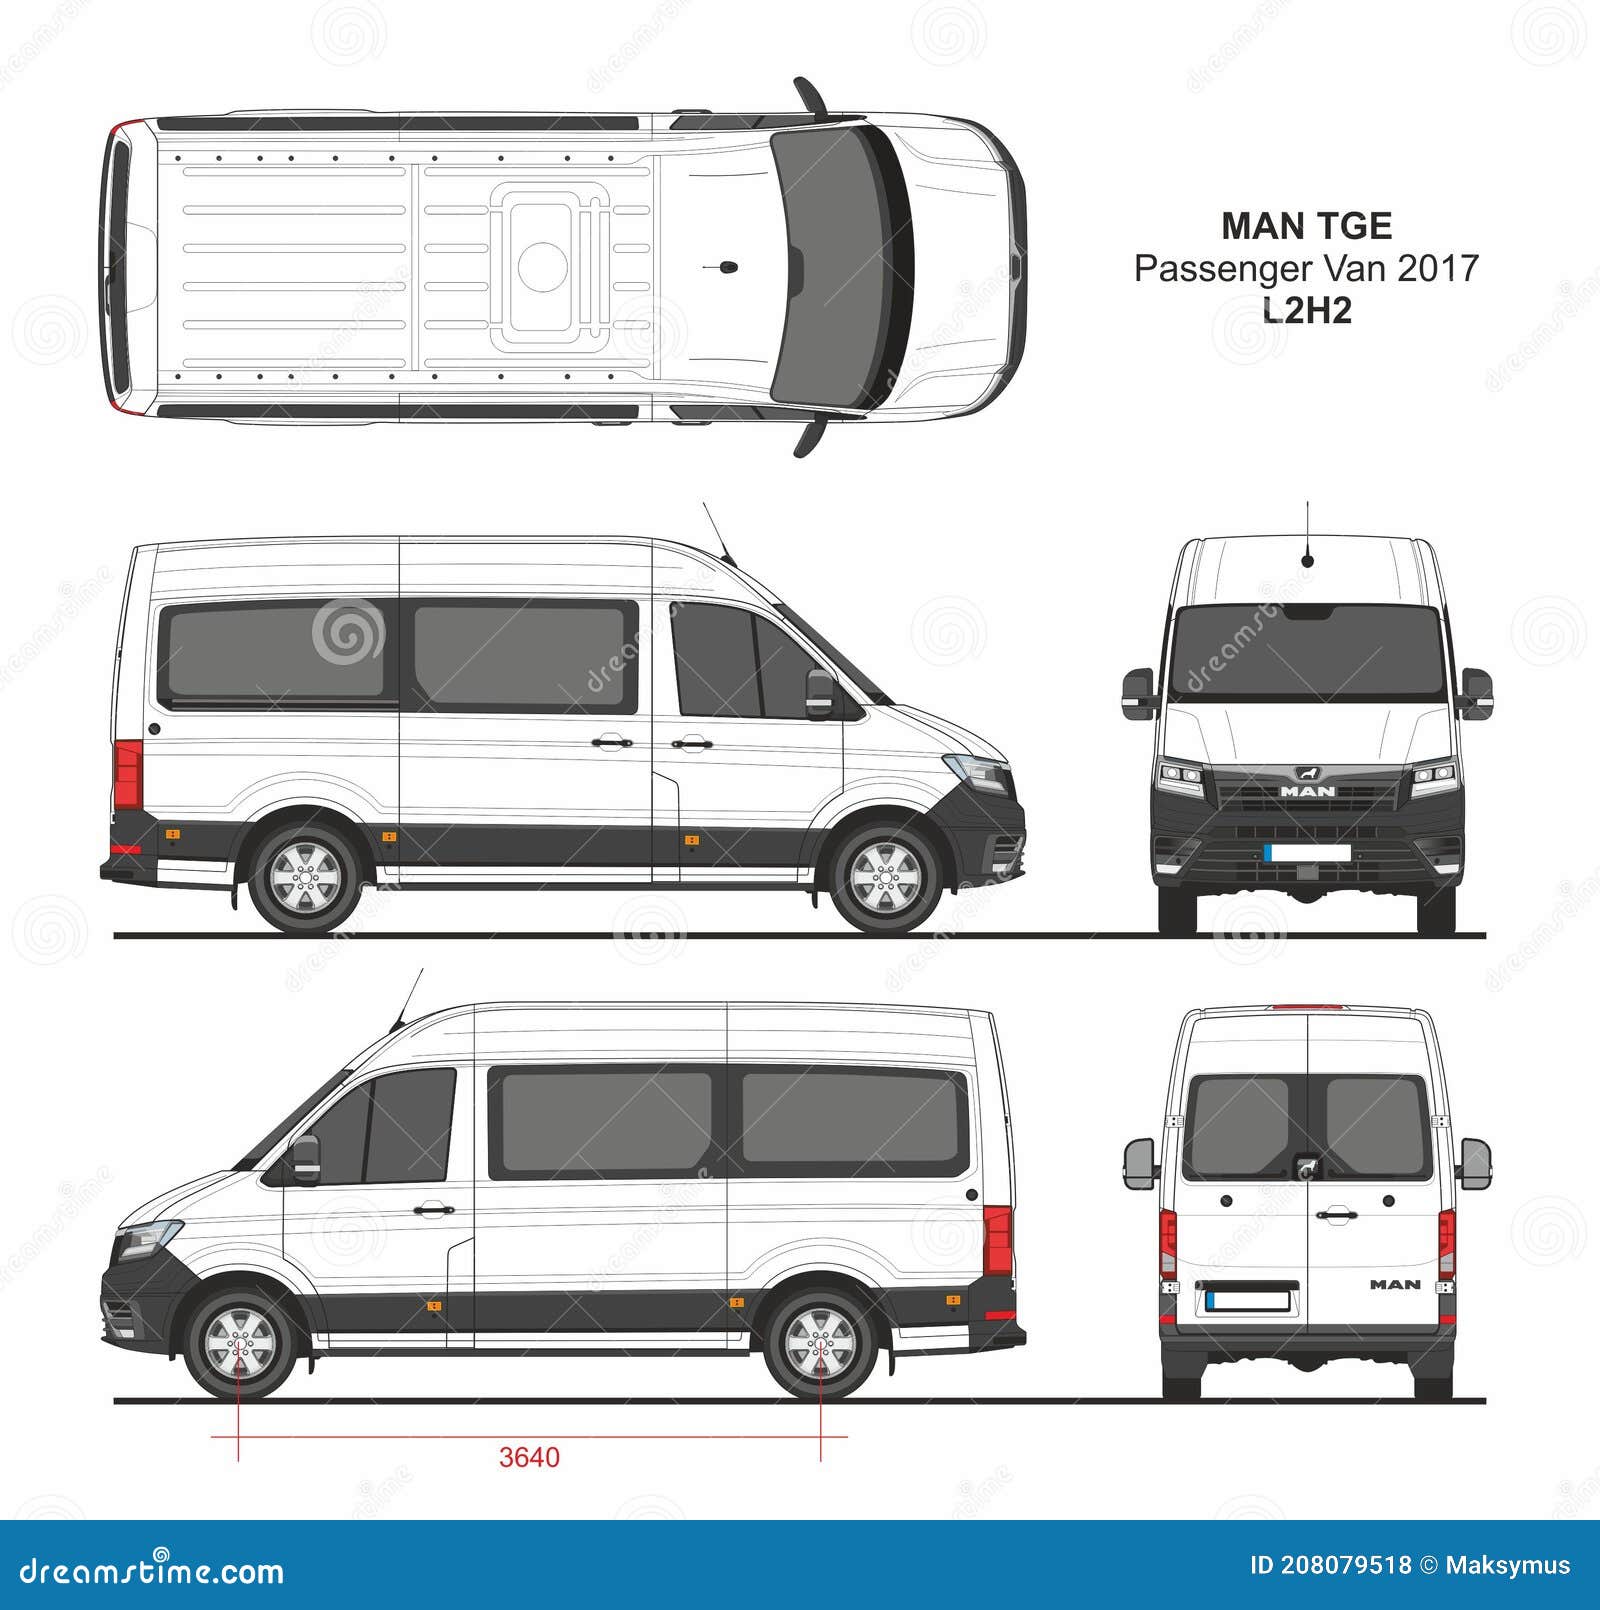 MAN TGE Passenger Van L2H2 2017 Stock Vector - Illustration of